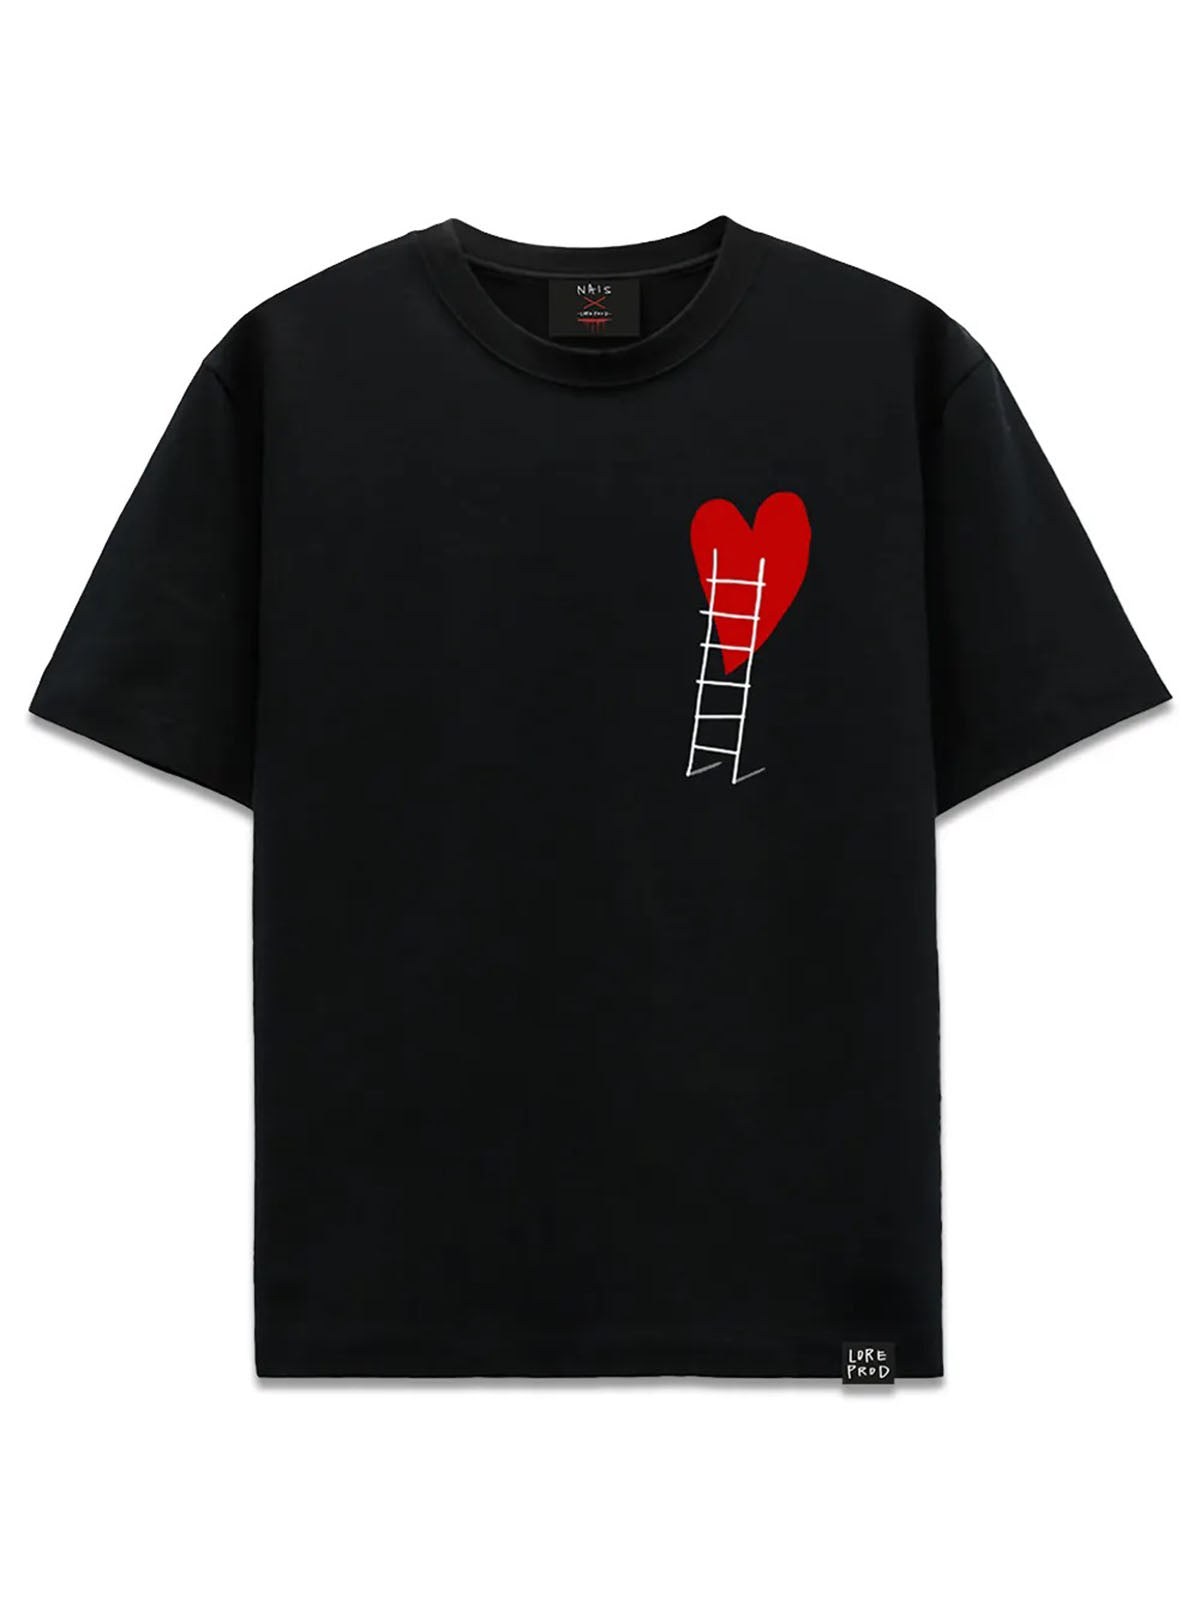 Nais Men's T-Shirt - Heart Lore Prod X Nais Tee - Black